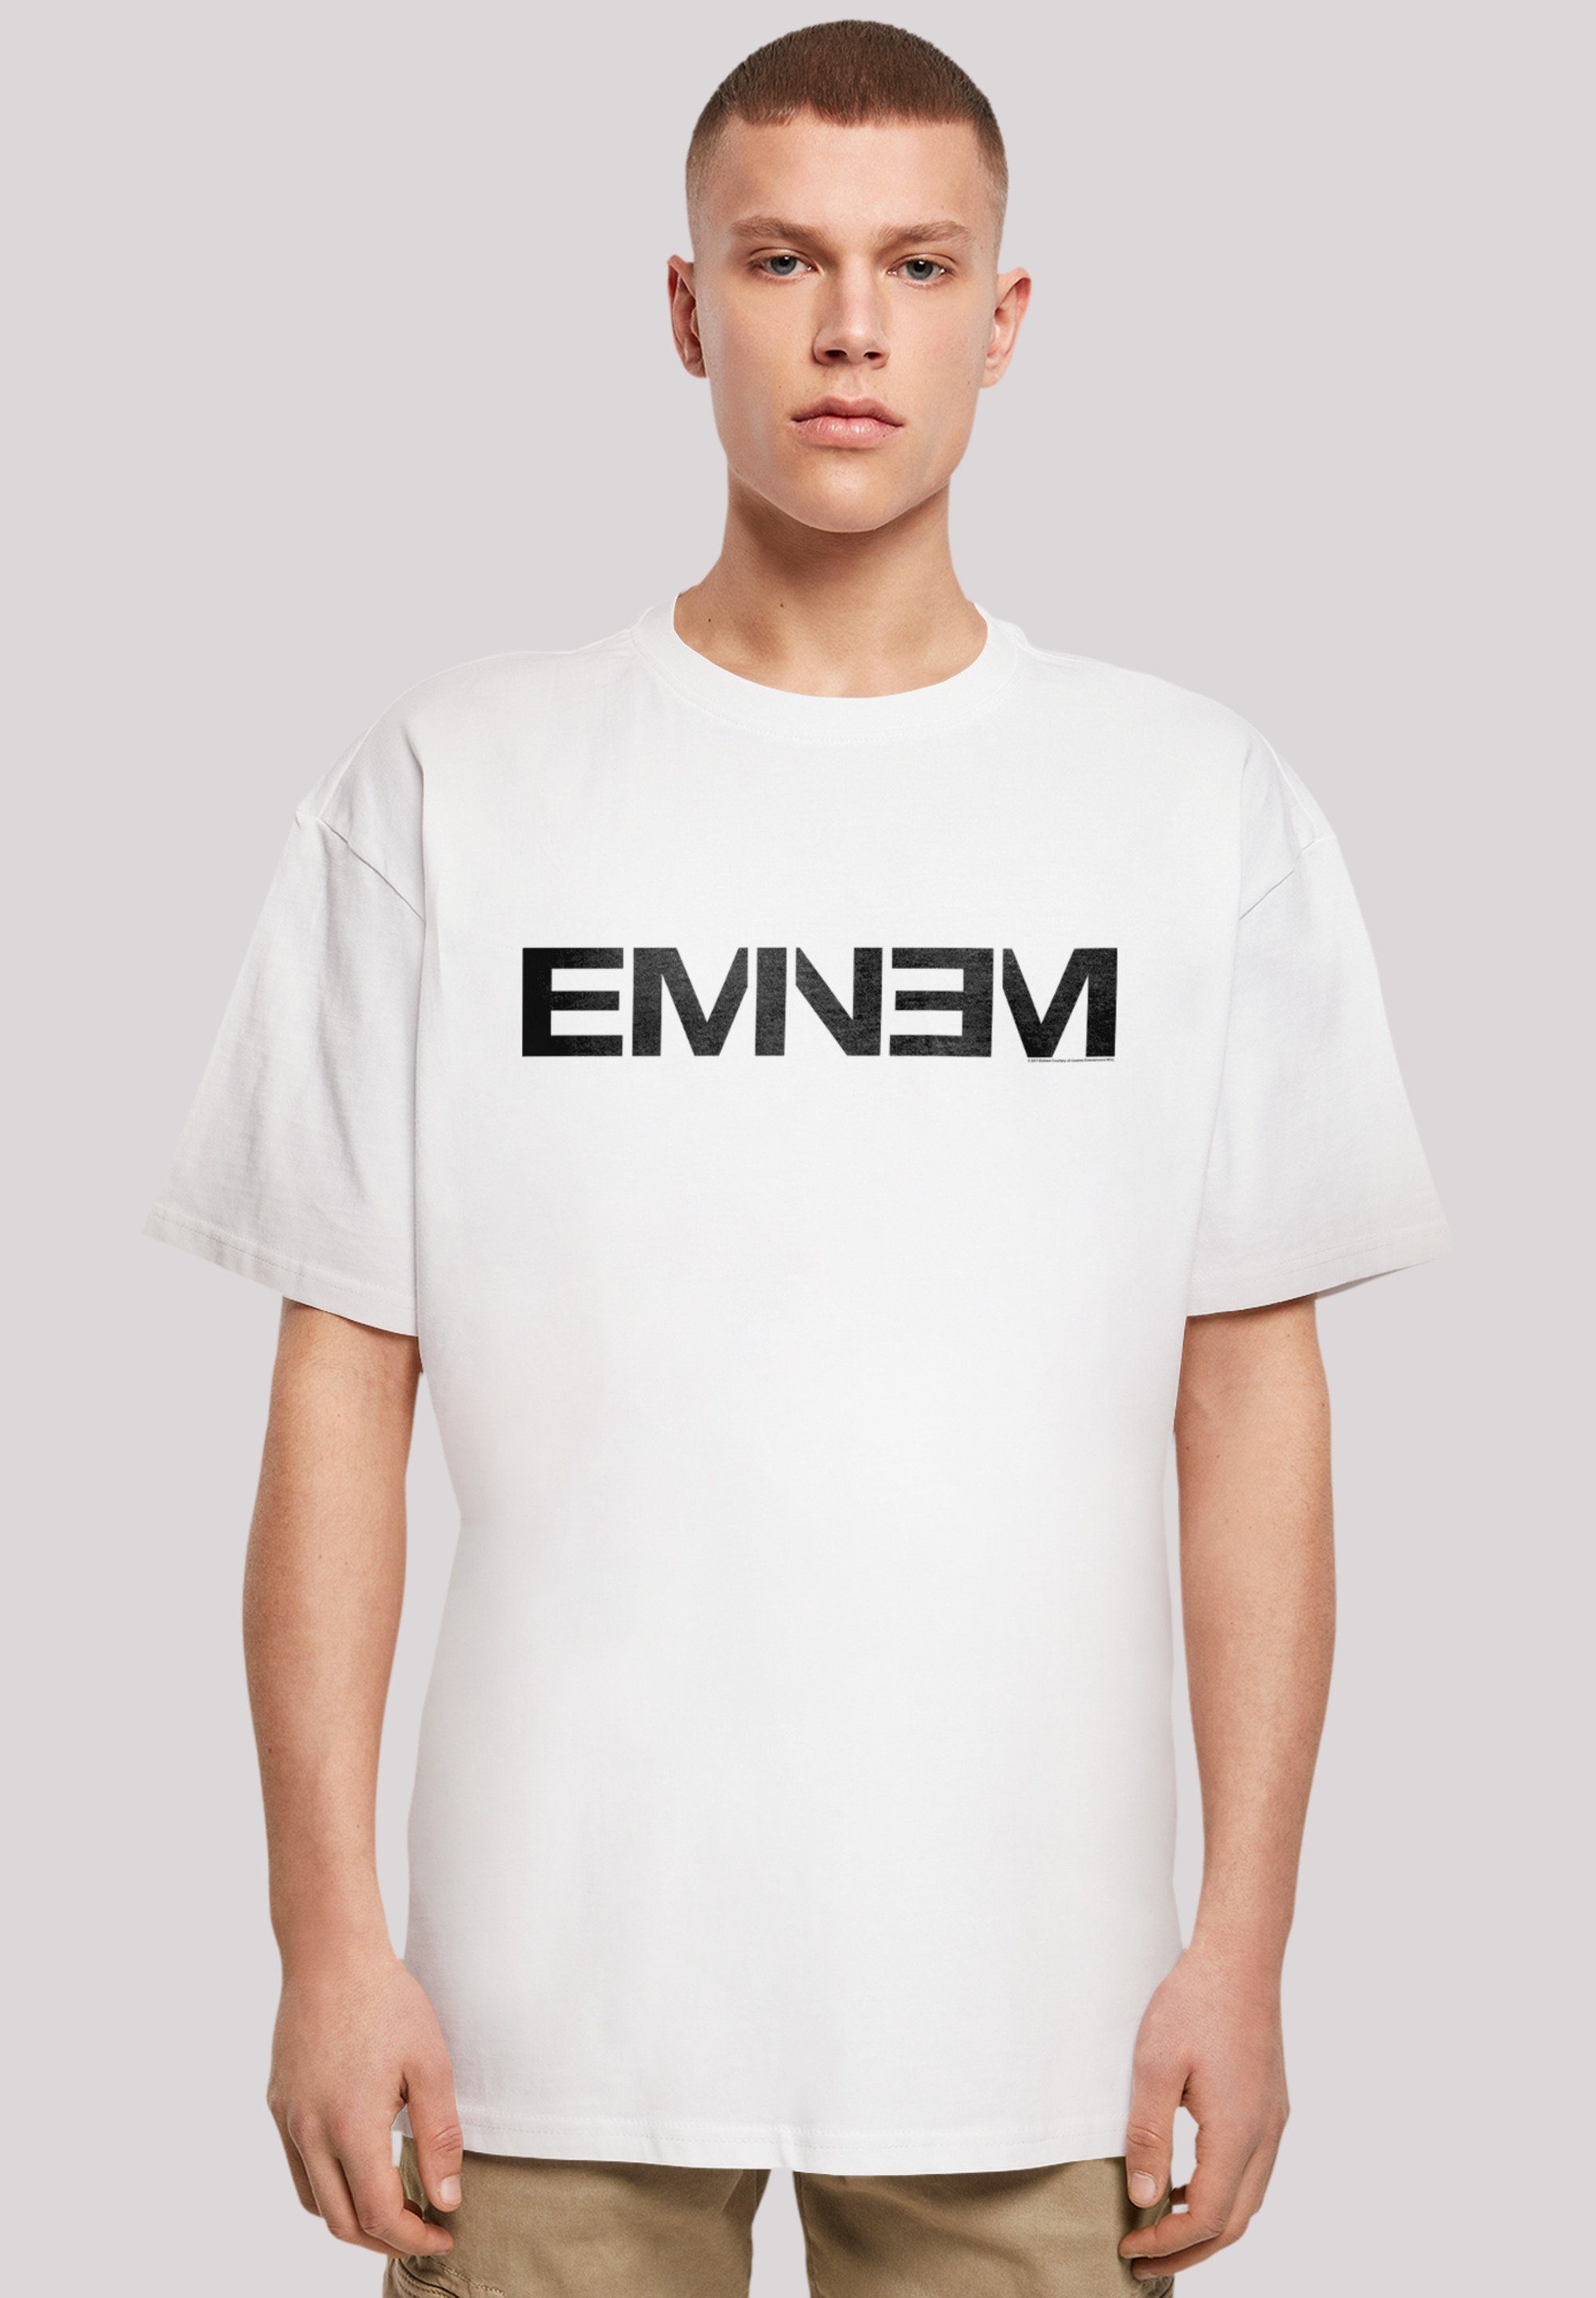 F4NT4STIC T-Shirt Eminem Hip Hop Rap Music Premium Qualität, Musik weiß